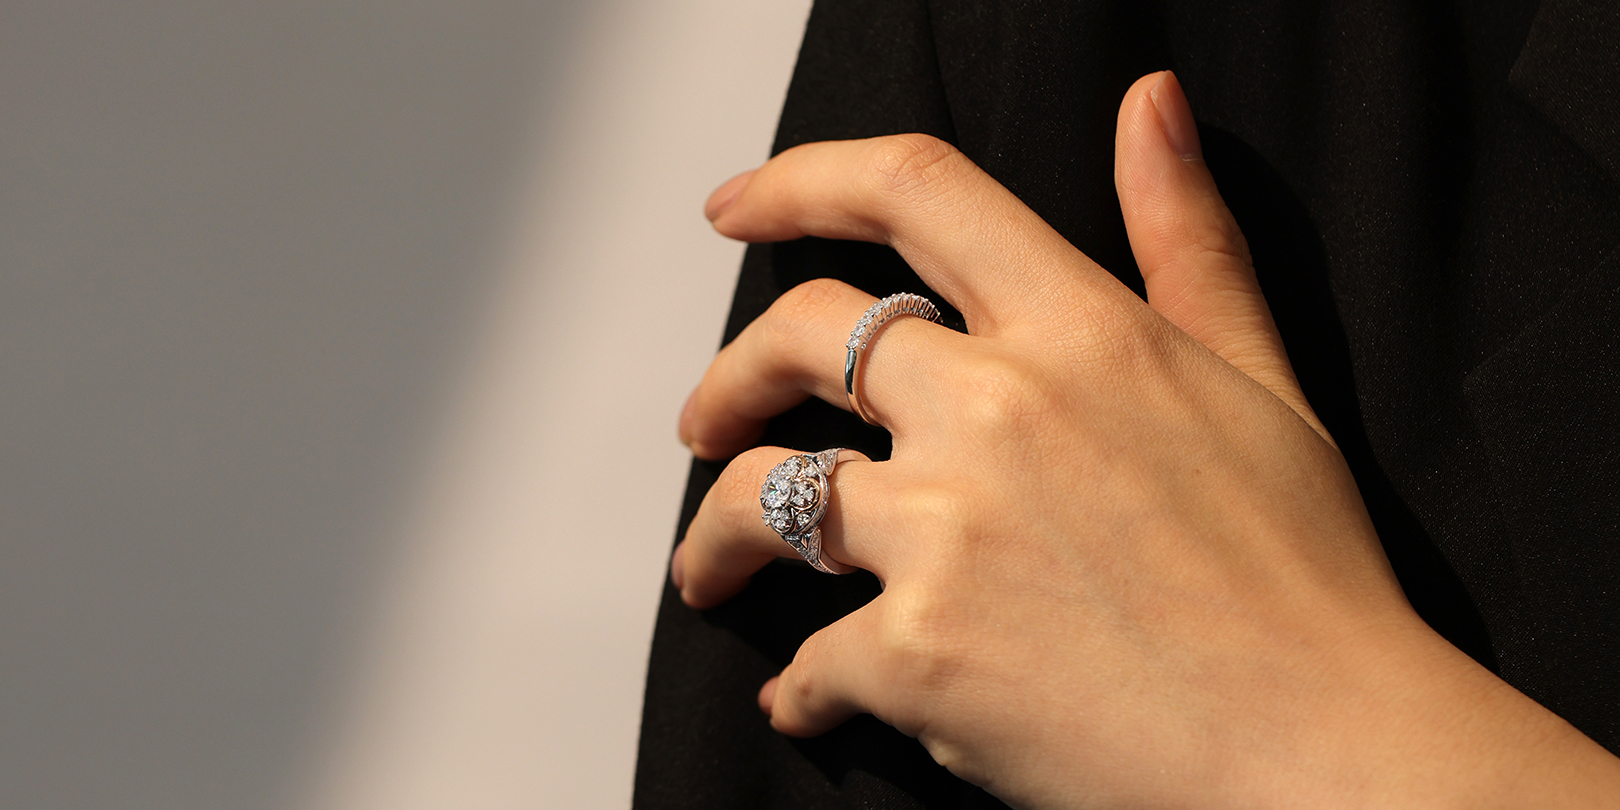 Darry Ring platinum diamond rings are friendlier to sensitive skin